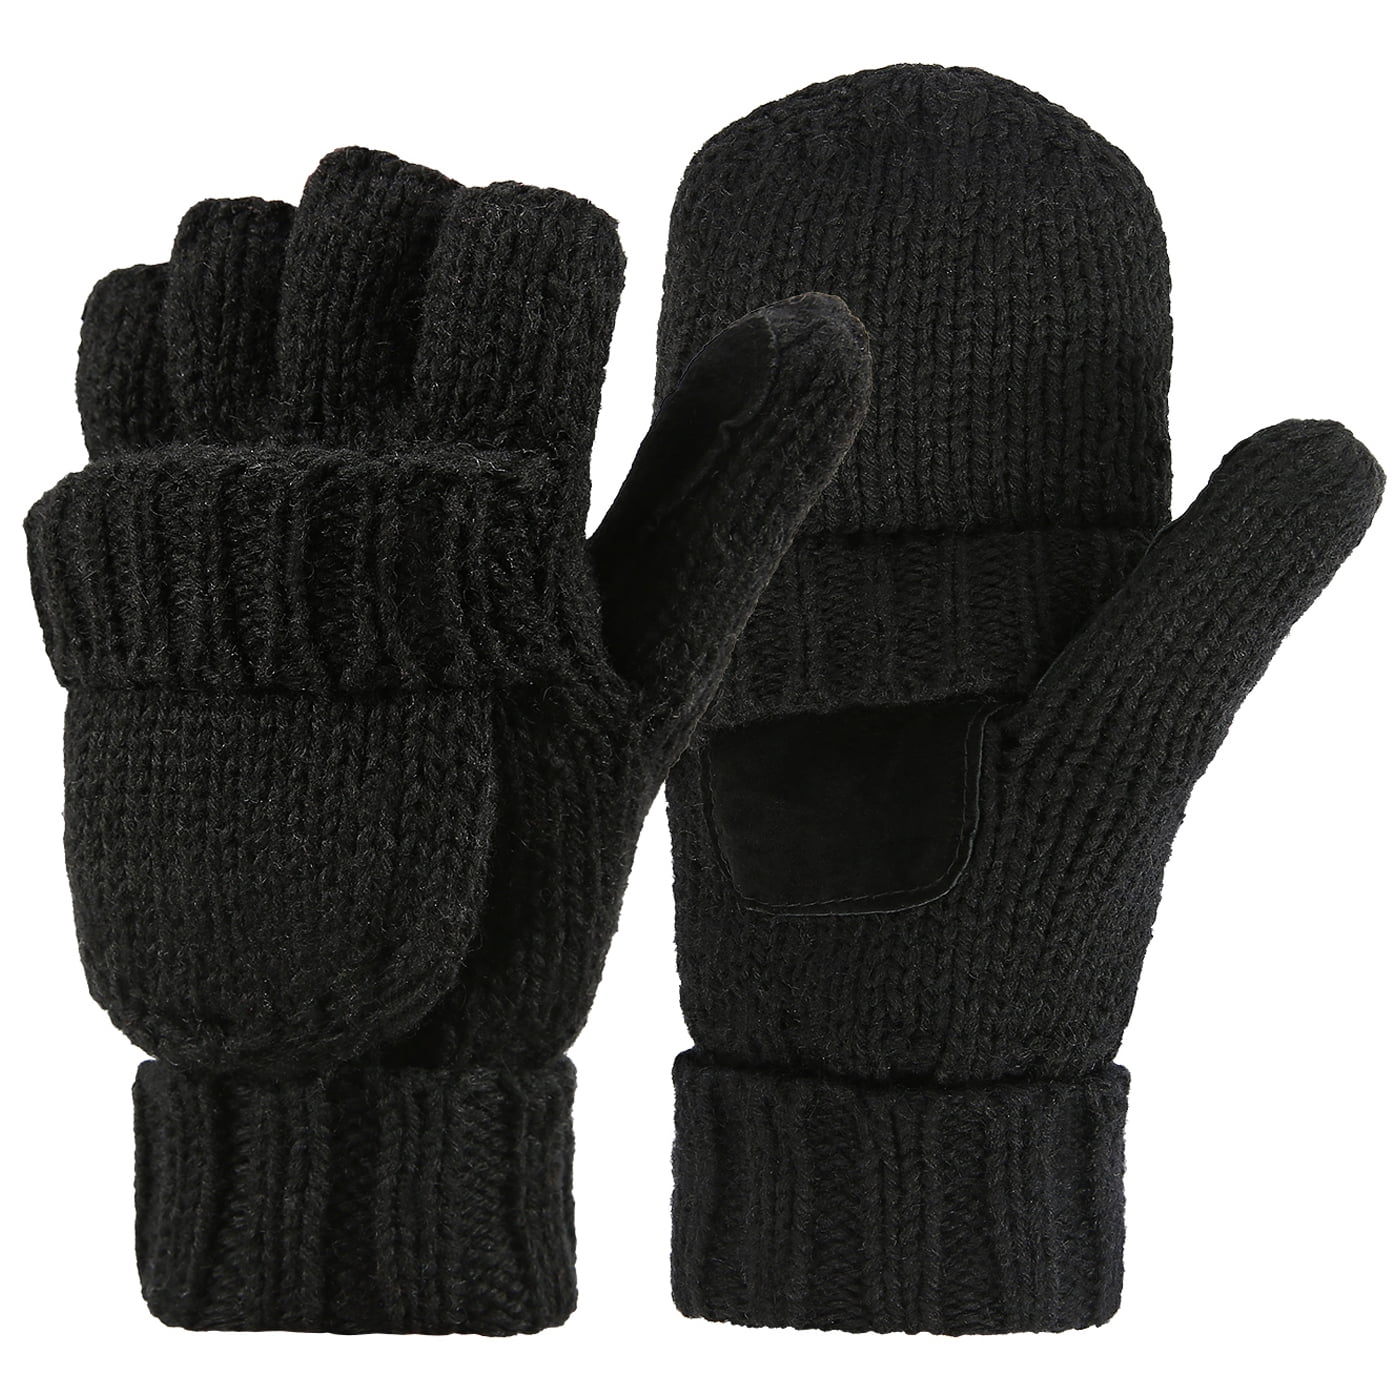 Winter Gloves Cold Weather Mittens Warm Wool Knit Gloves Mittens